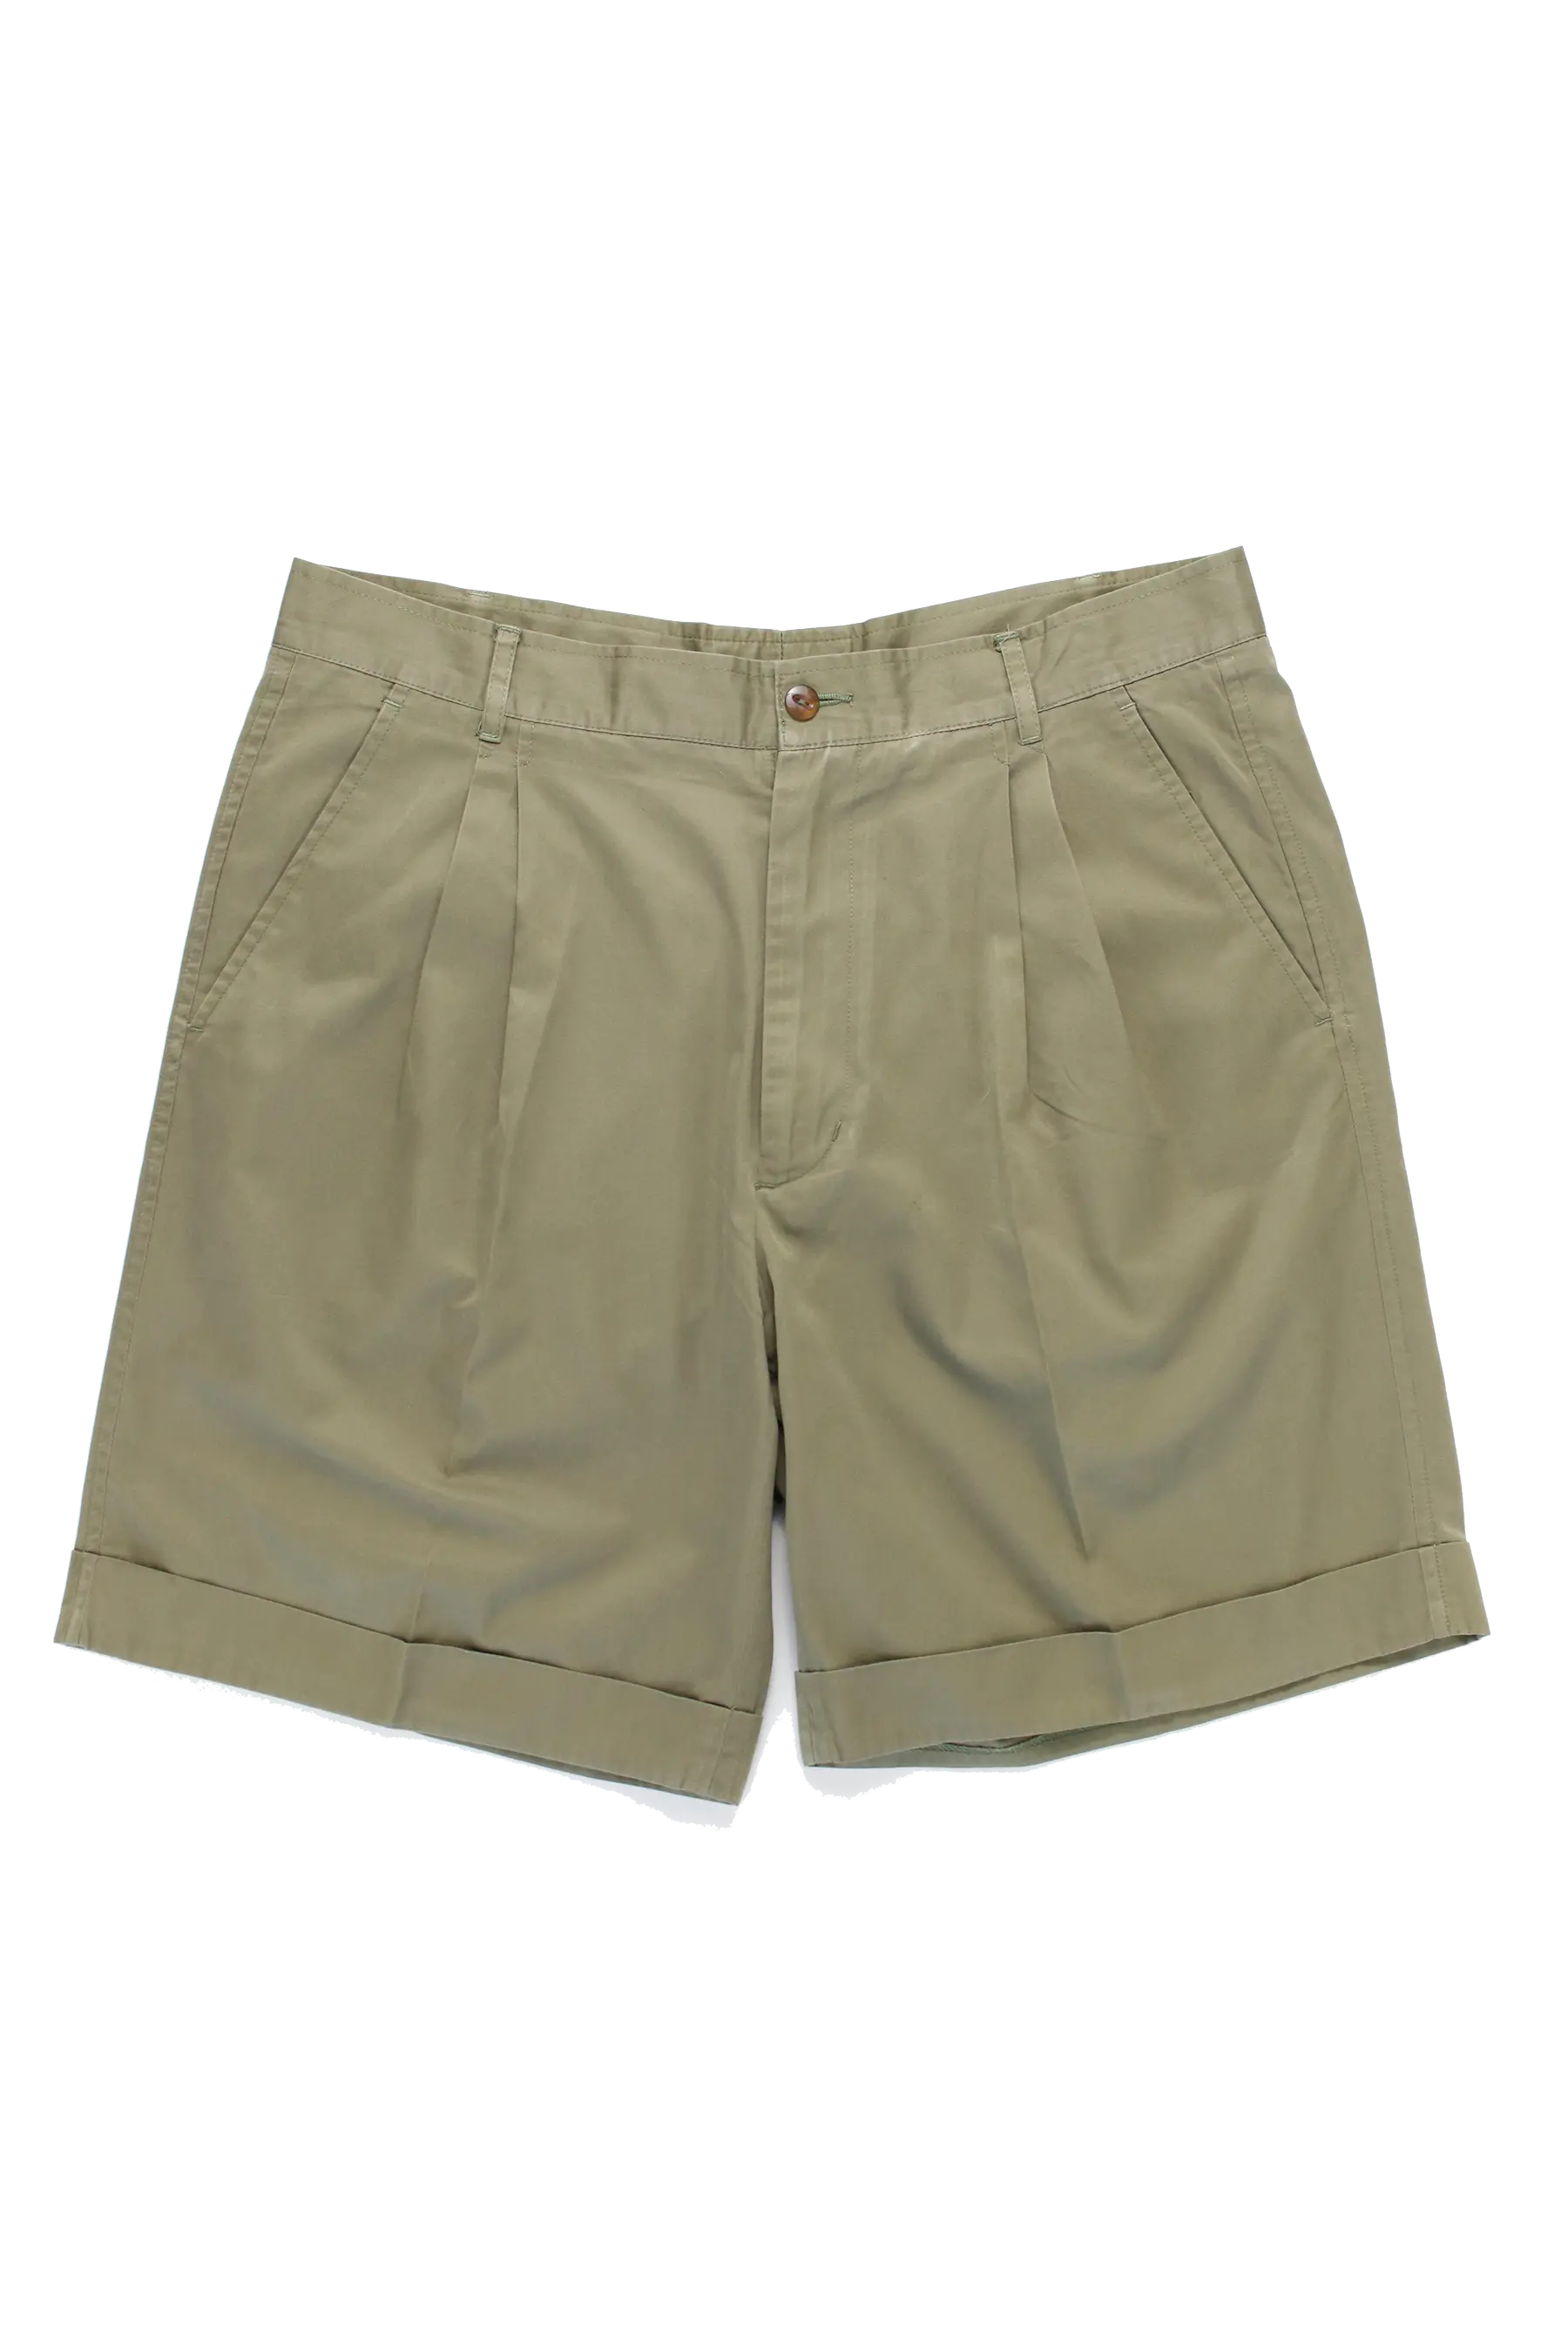 Fila Scout Shorts